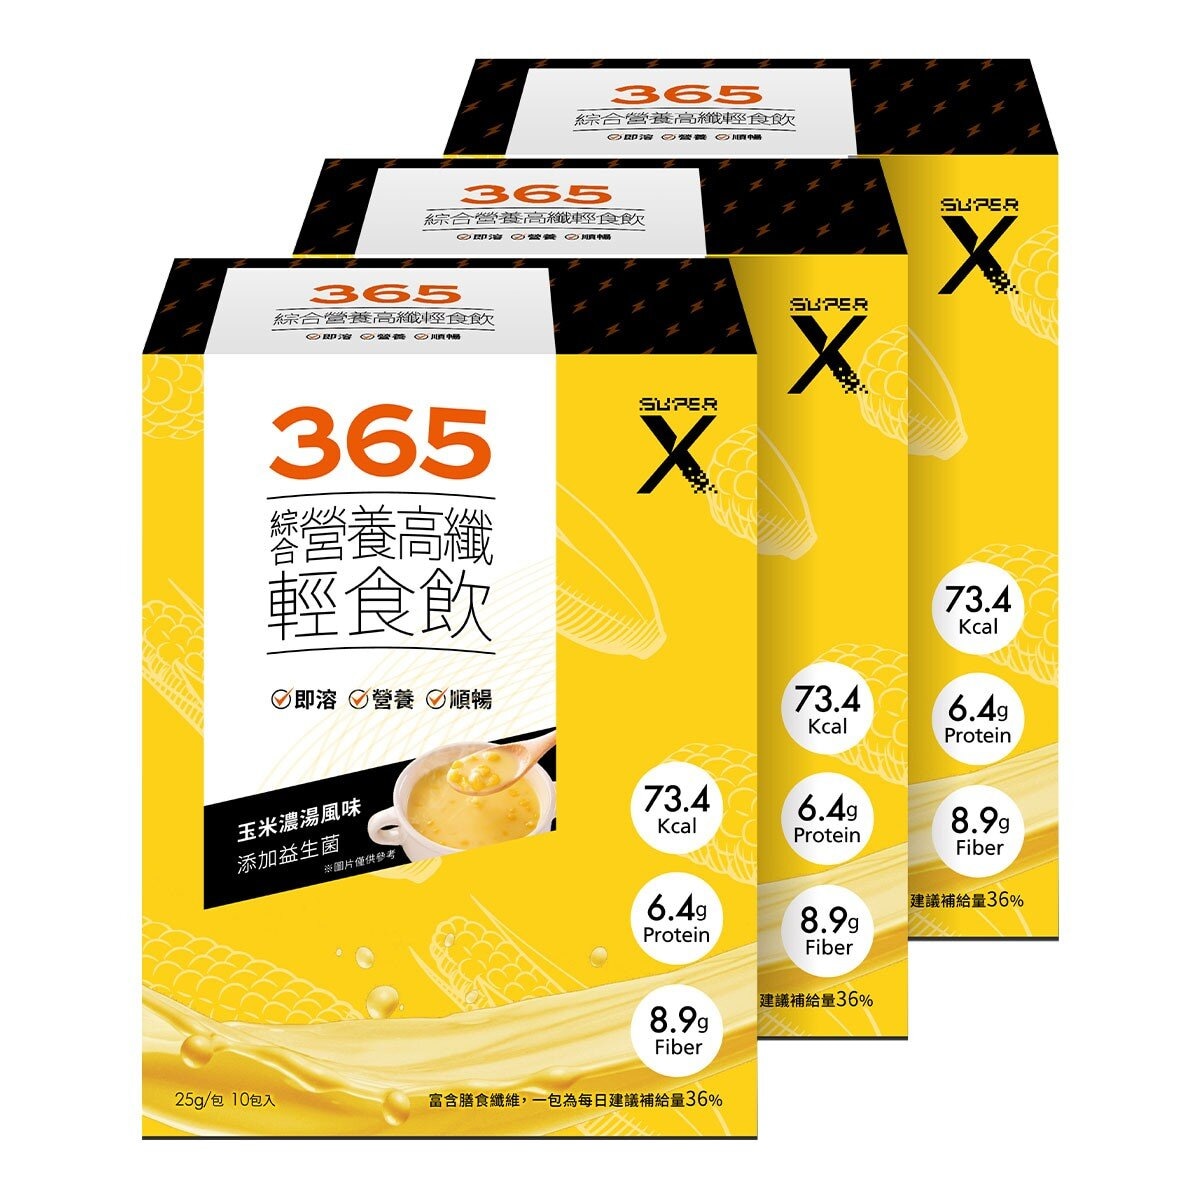 Super X 綜合營養高纖飲玉米濃湯風味10包X 3盒組| Costco 好市多